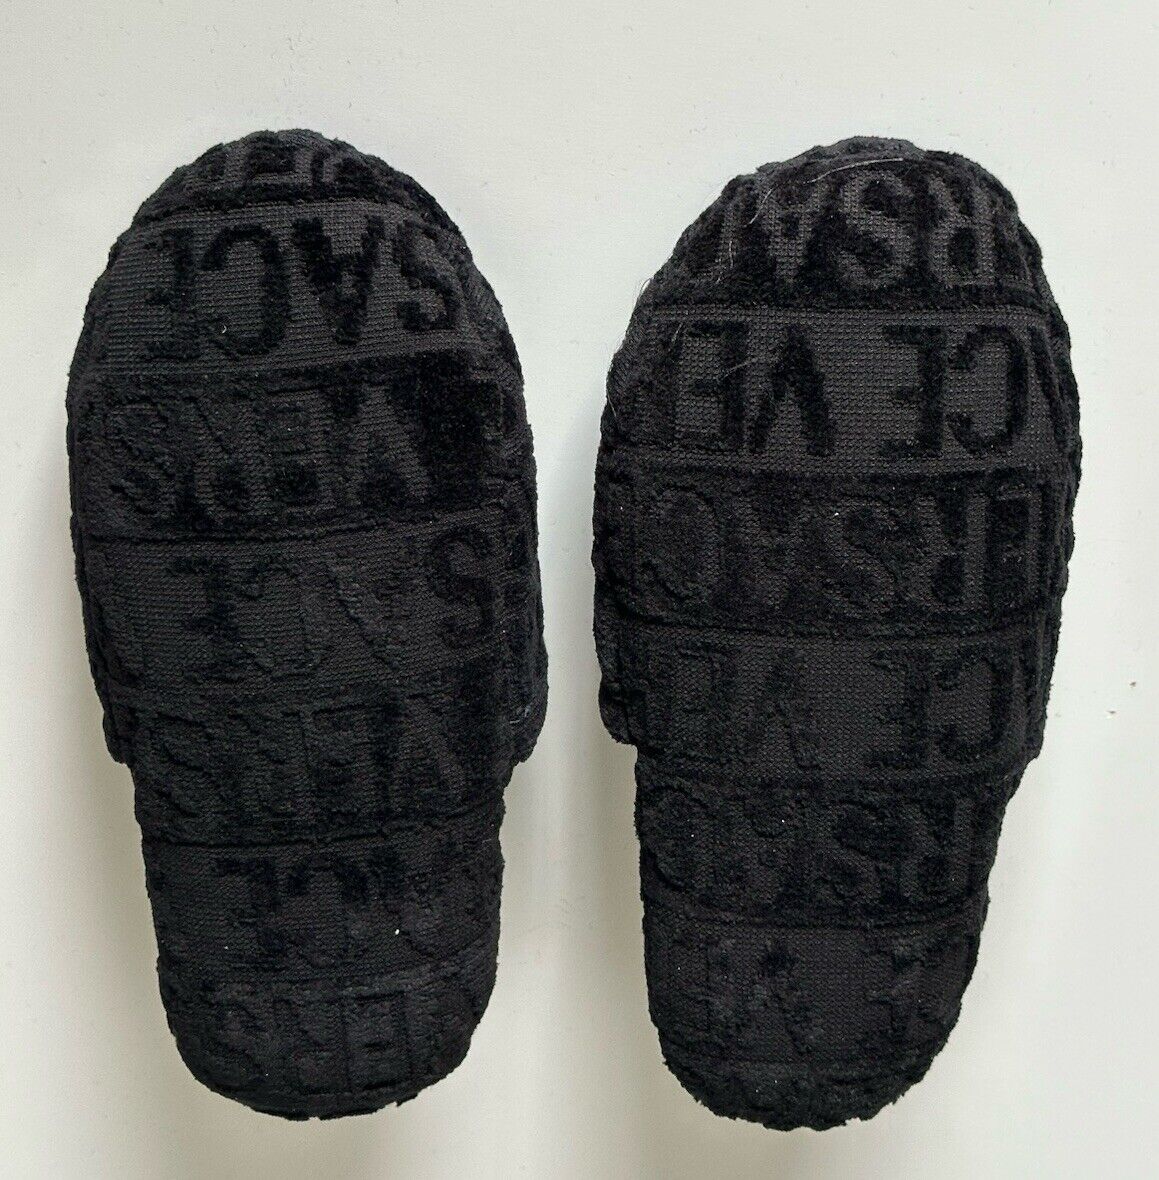 Versace Medusa Head Women’s Bath Slippers Black Small Leather Pouch ZSLB00004